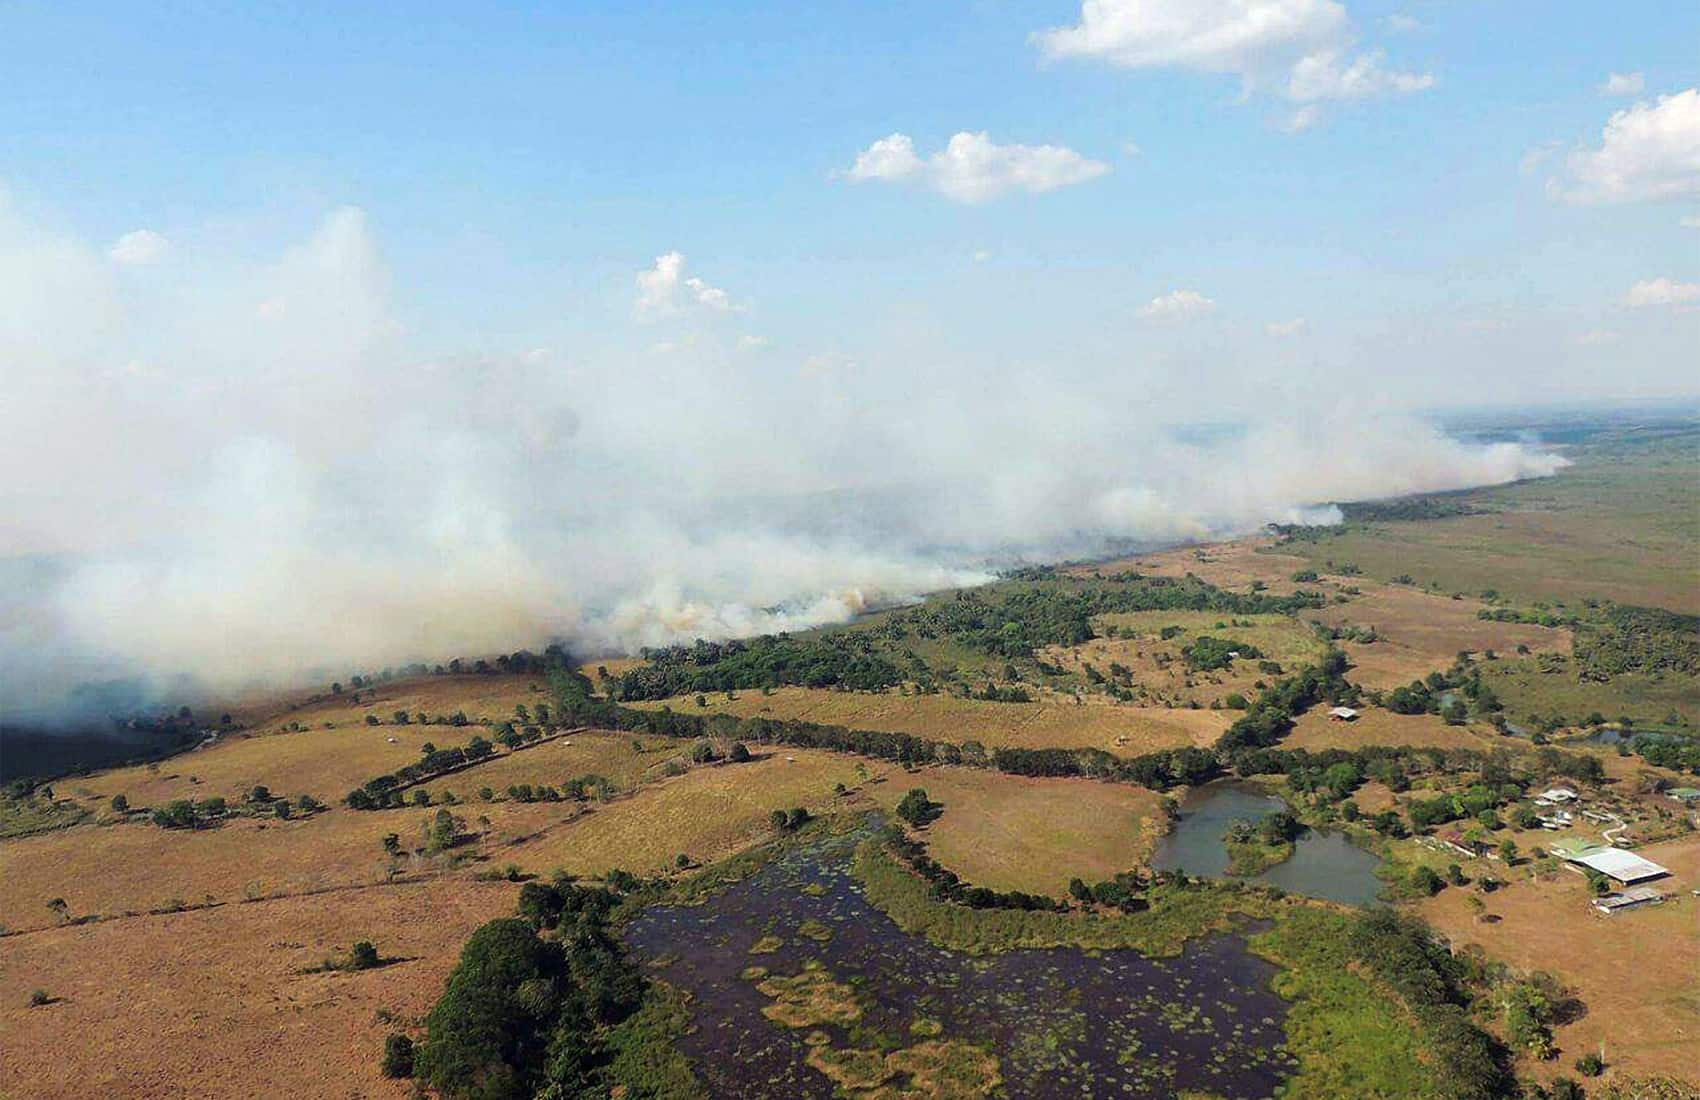 Wildfires at Corredor Fronterizo. April 2016